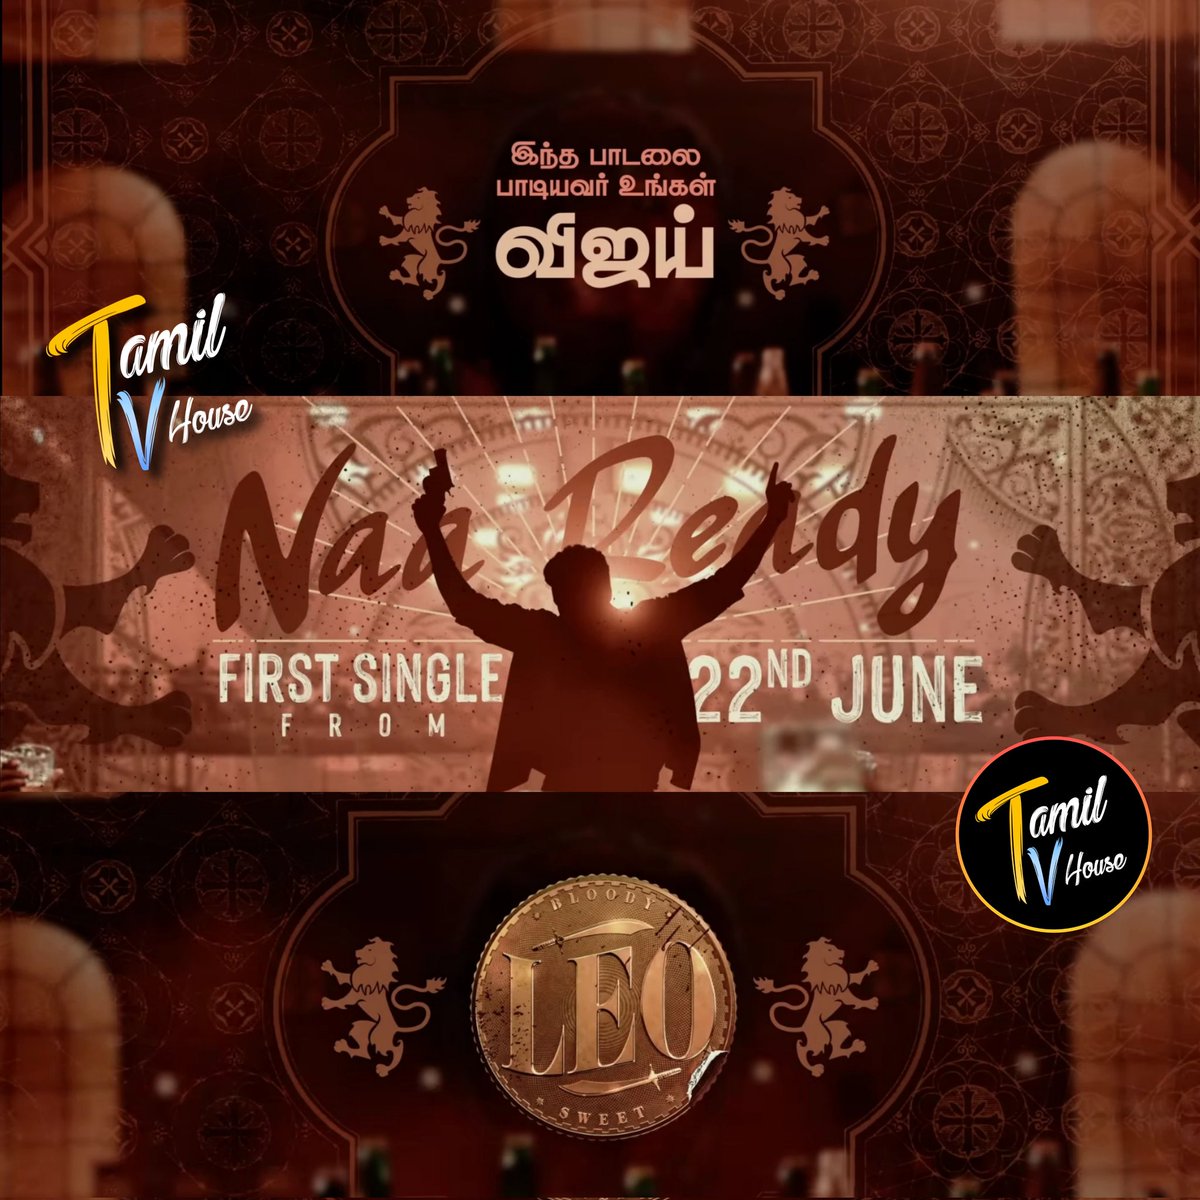 #NaaReady nanba 🔥
Let the celebrations begin 🥁
#LEOFirstSingle from JUNE 22 💥

#SAISANGO #TAMILTVHouse
#ThalapathyVijay #NaaReadyFirstSingle